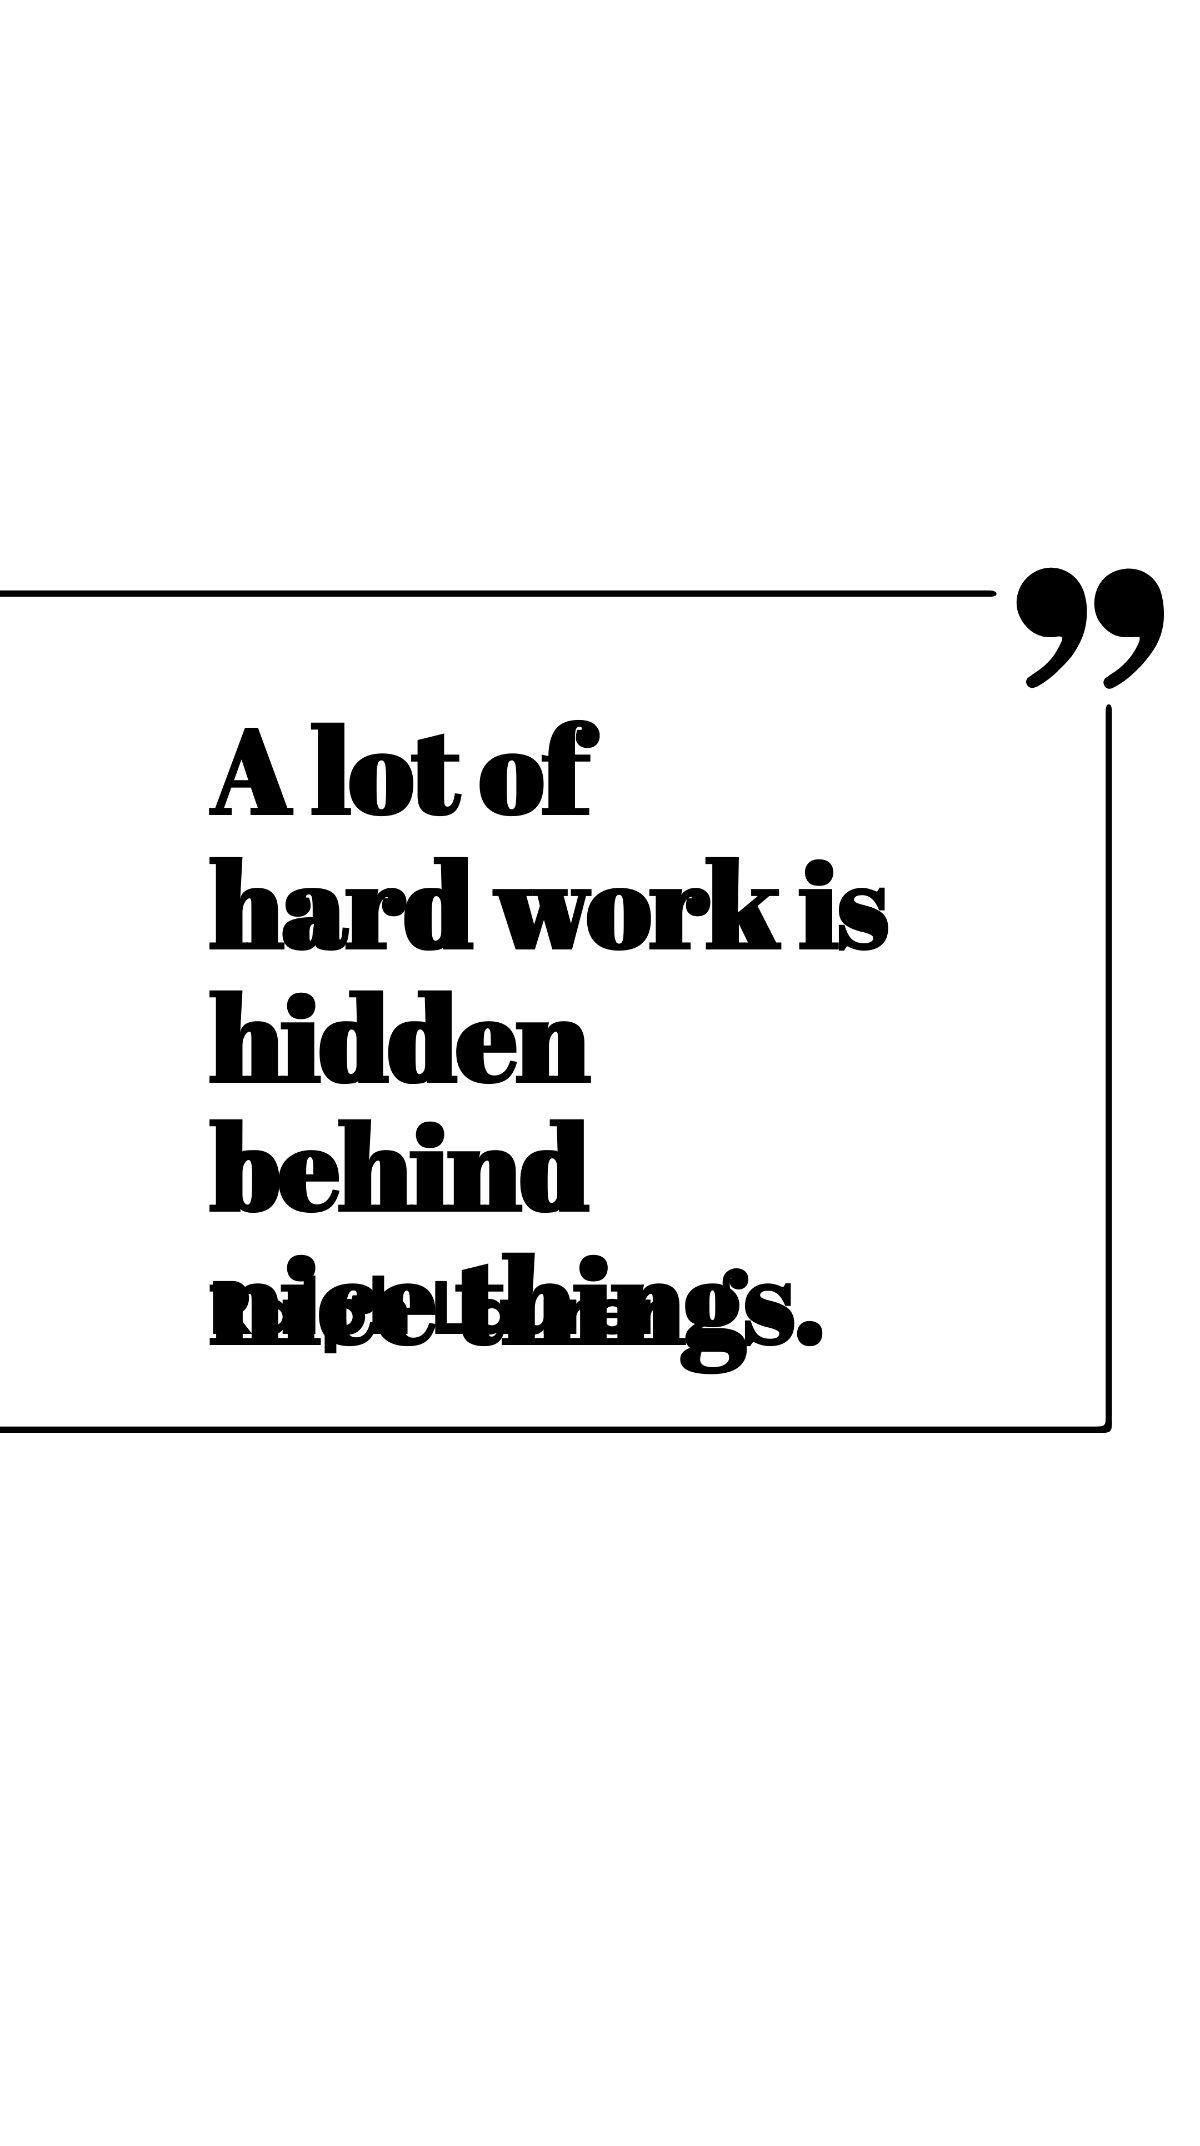 Ralph Lauren - A lot of hard work is hidden behind nice things. Template